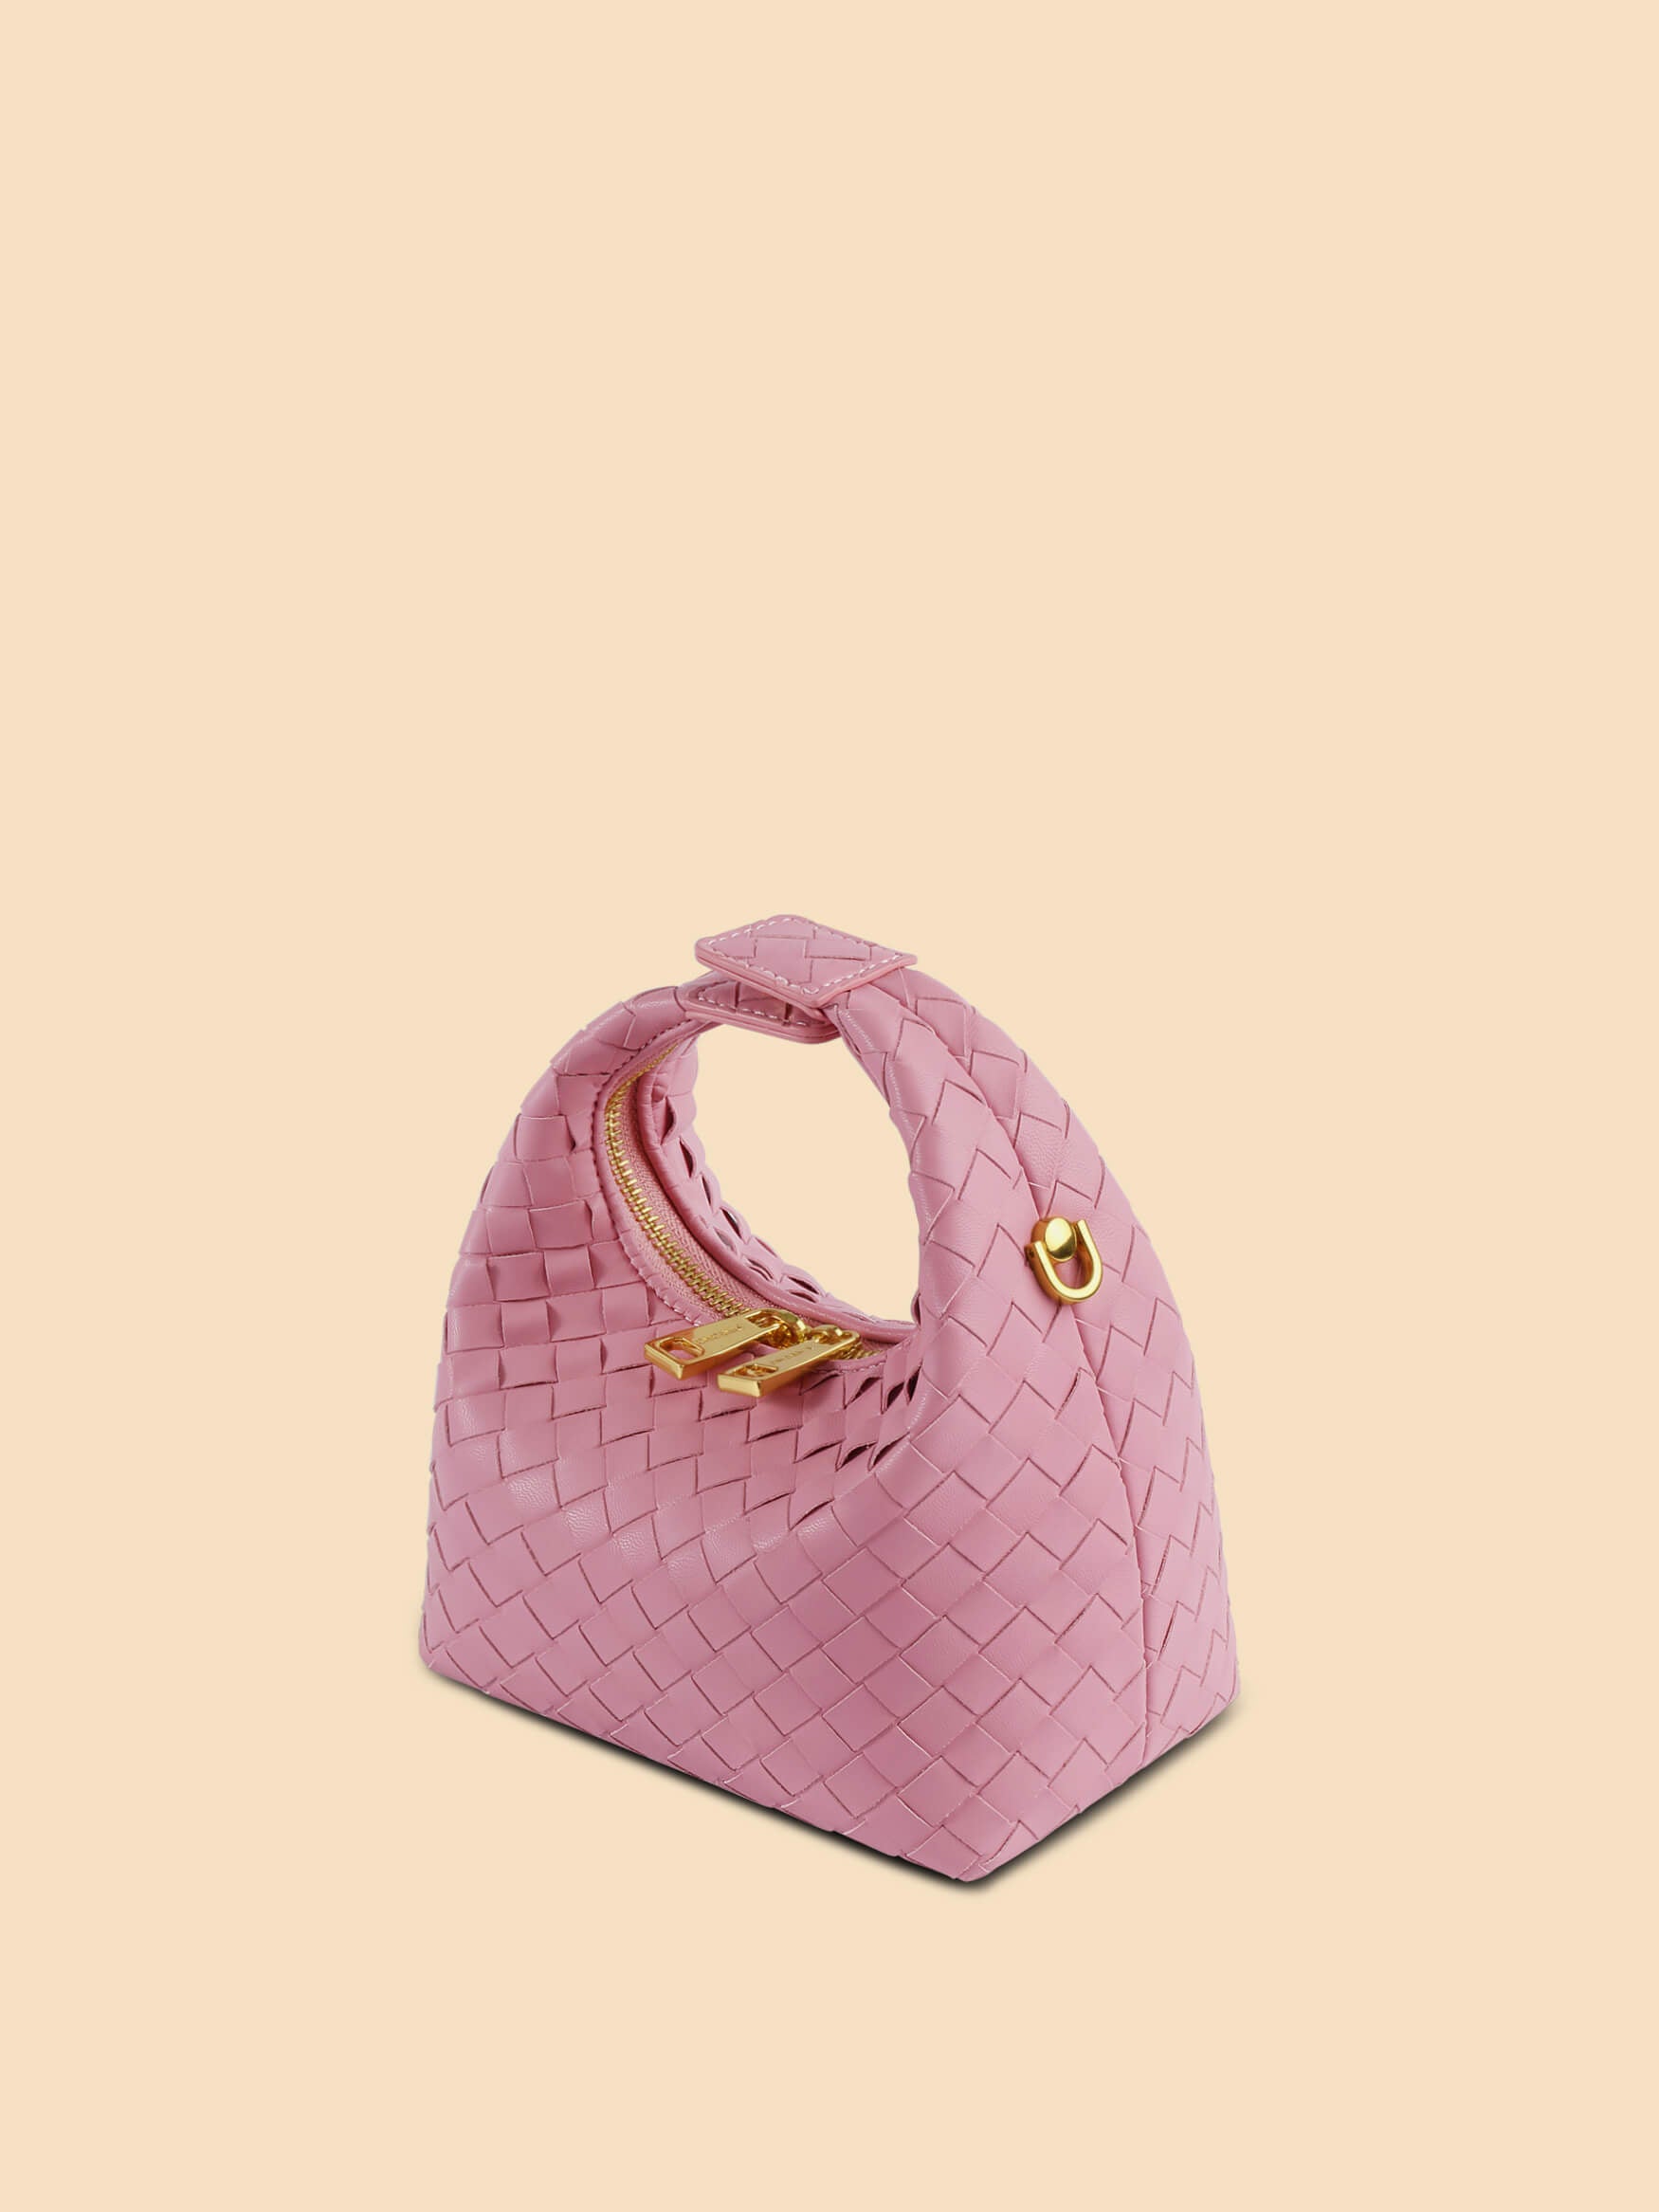 SINBONO Vienna Pink Braided Leather Handbags -Vegan Leather Women Bag